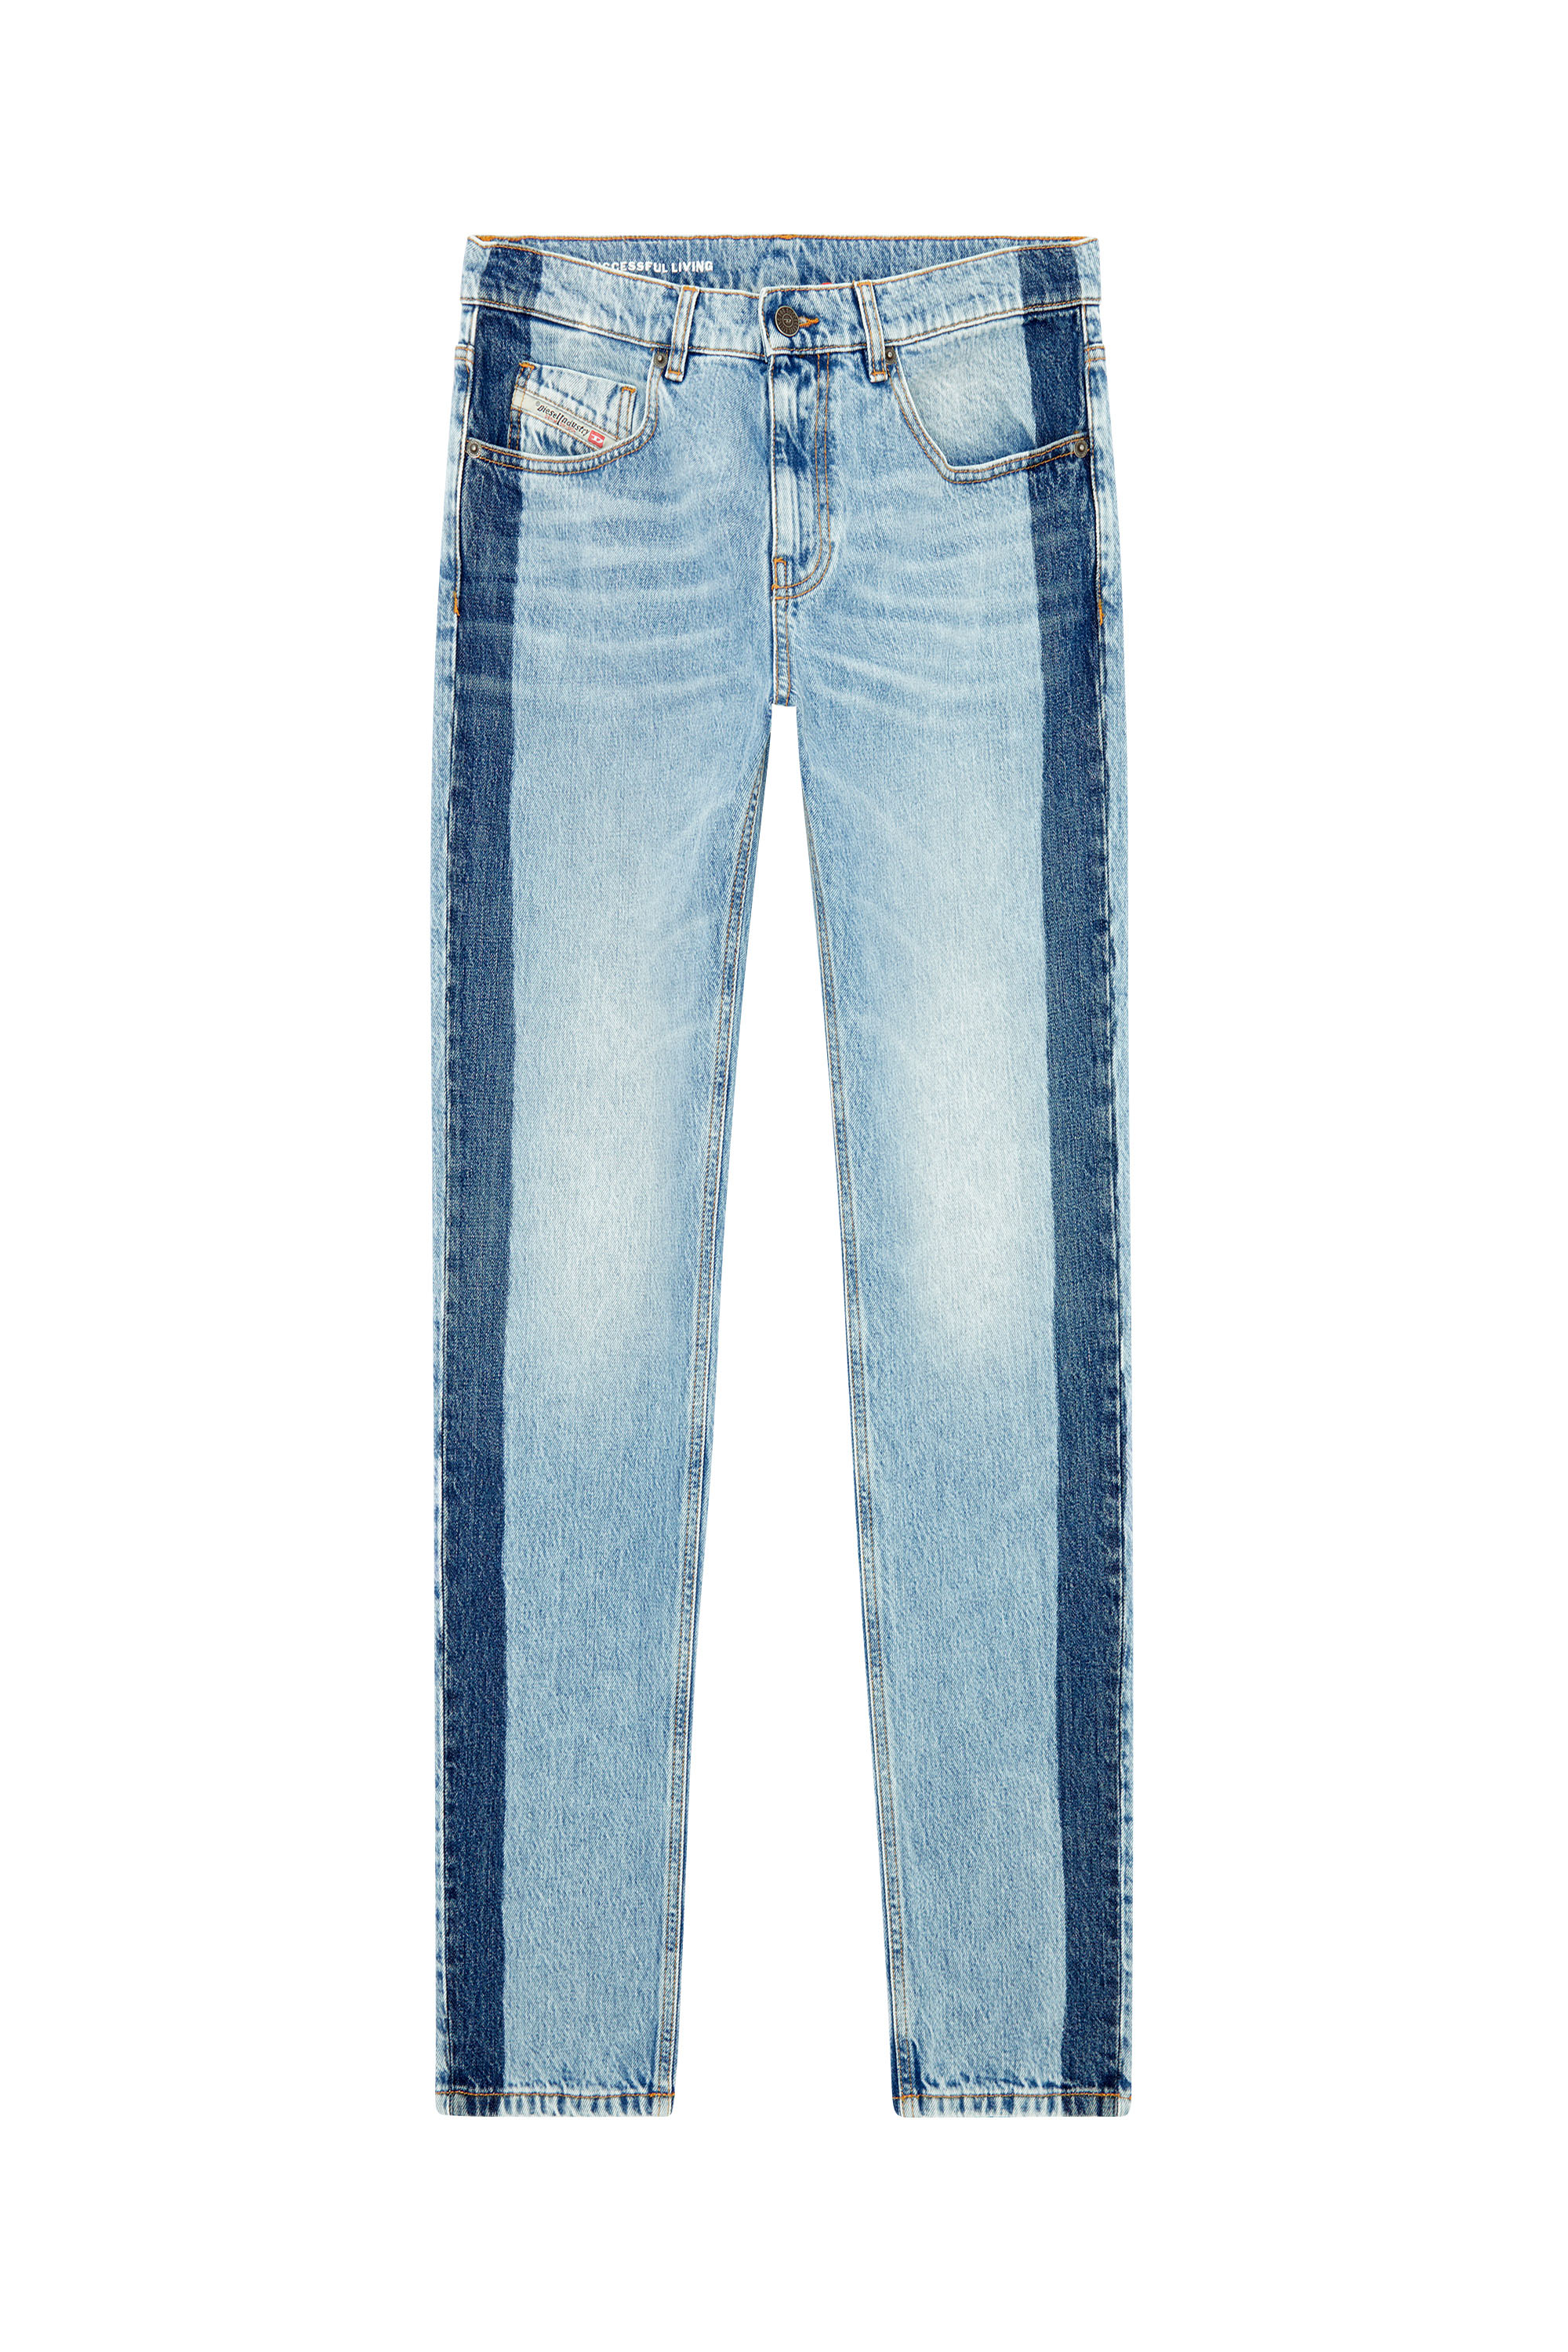 Diesel - Slim Jeans 2019 D-Strukt 0GHAC, Hombre Slim Jeans - 2019 D-Strukt in Azul marino - Image 5